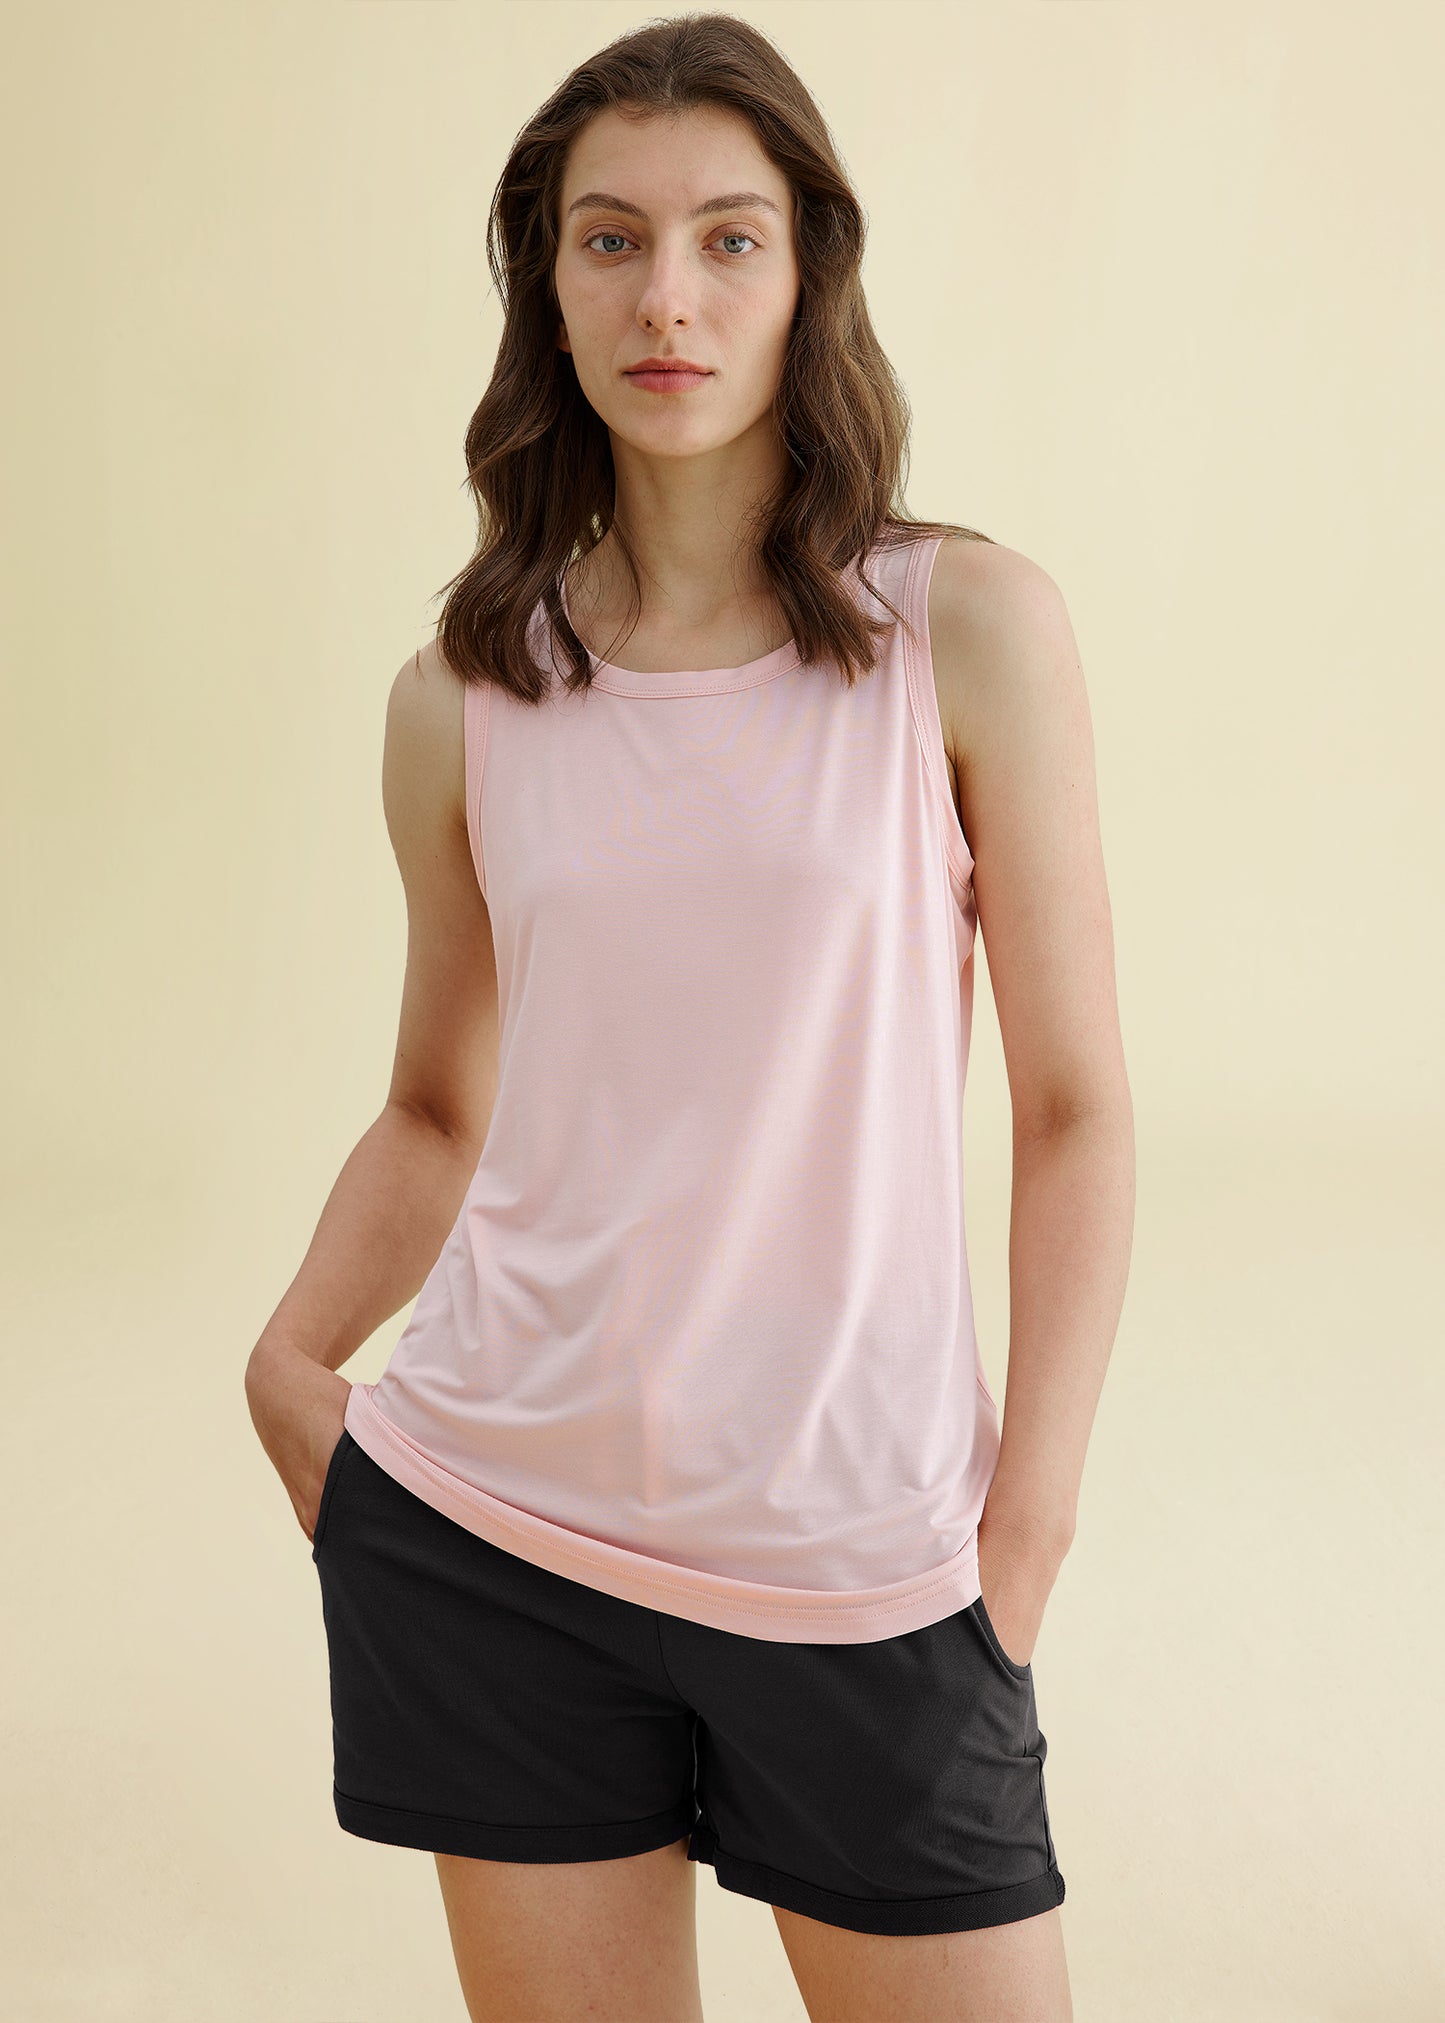 Women's Bamboo Viscose Sleep Tank Top Sleeveless Pajamas Shirt – Latuza